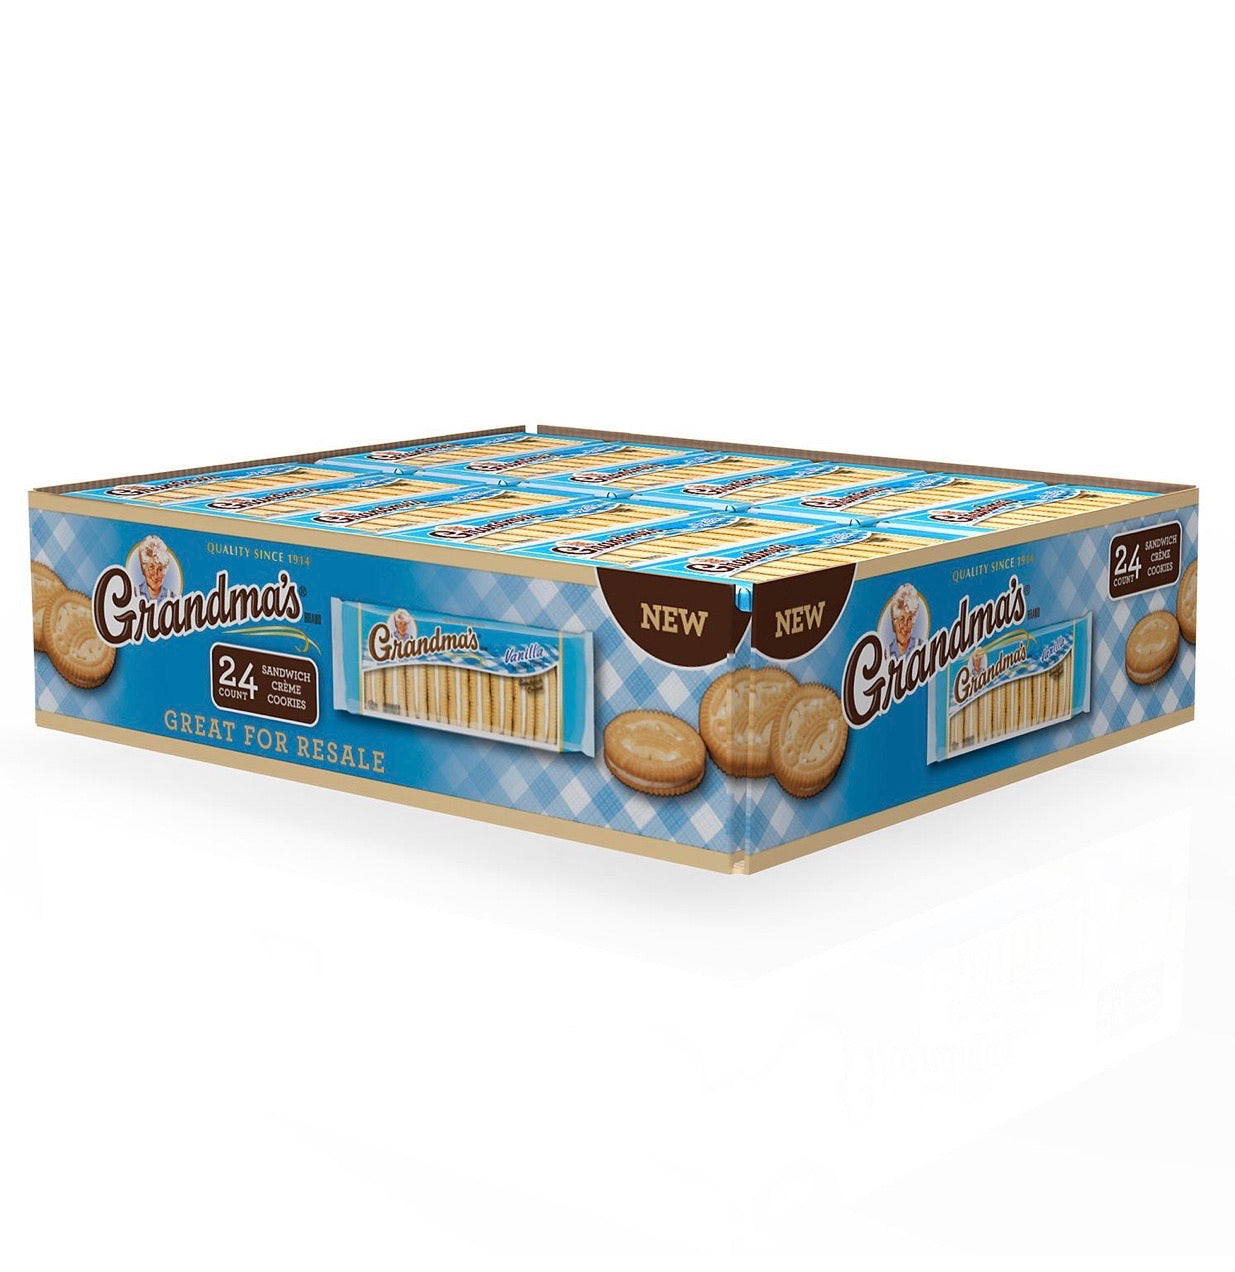 Grandma Vanilla Cream Cookies